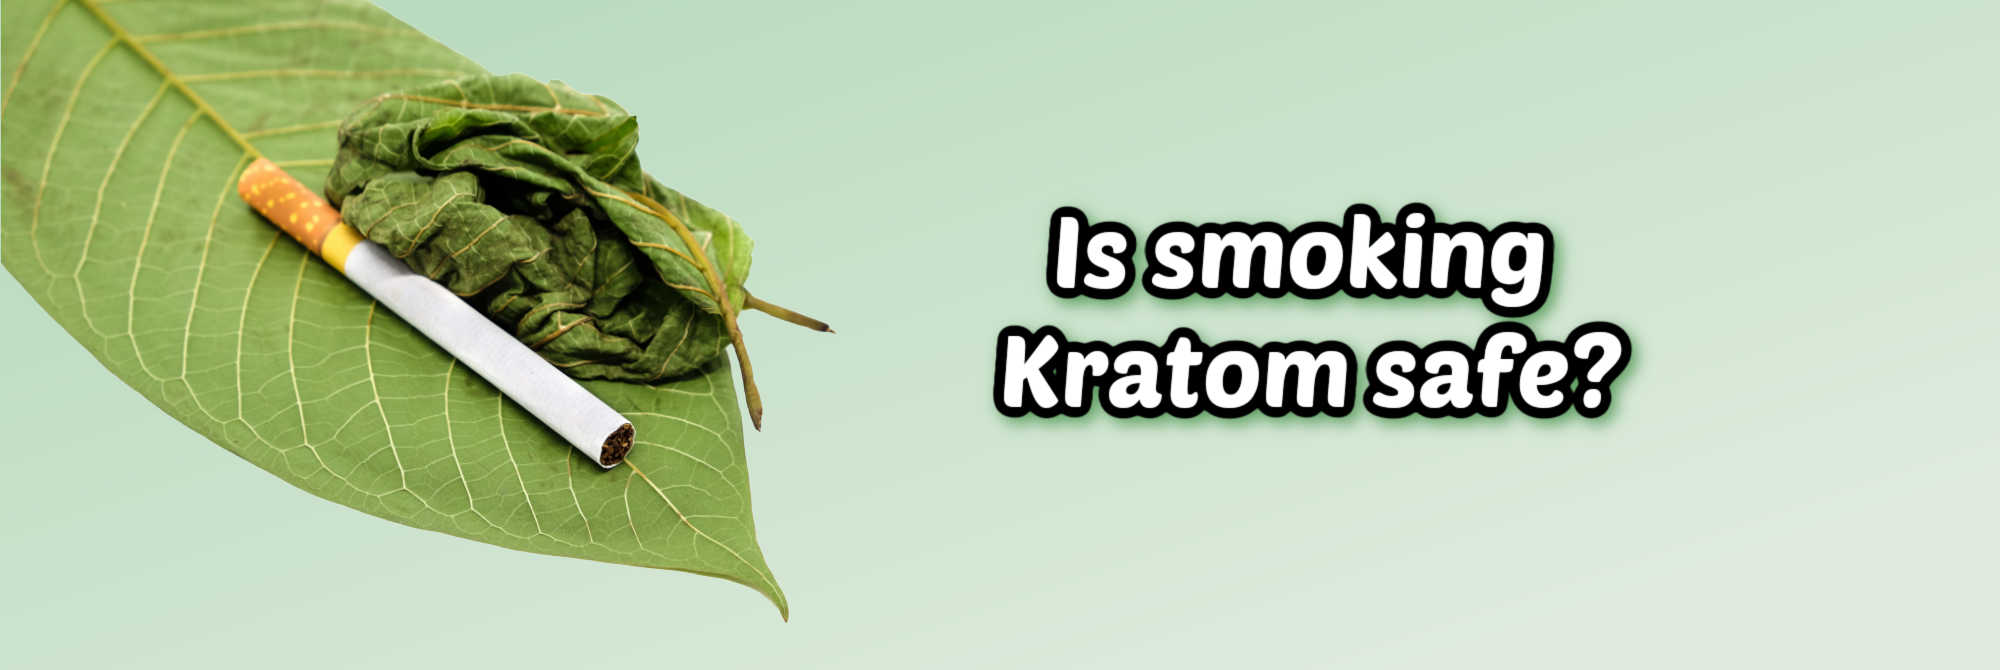 Can You Smoke Kratom? Safety, Risks, and Alternatives